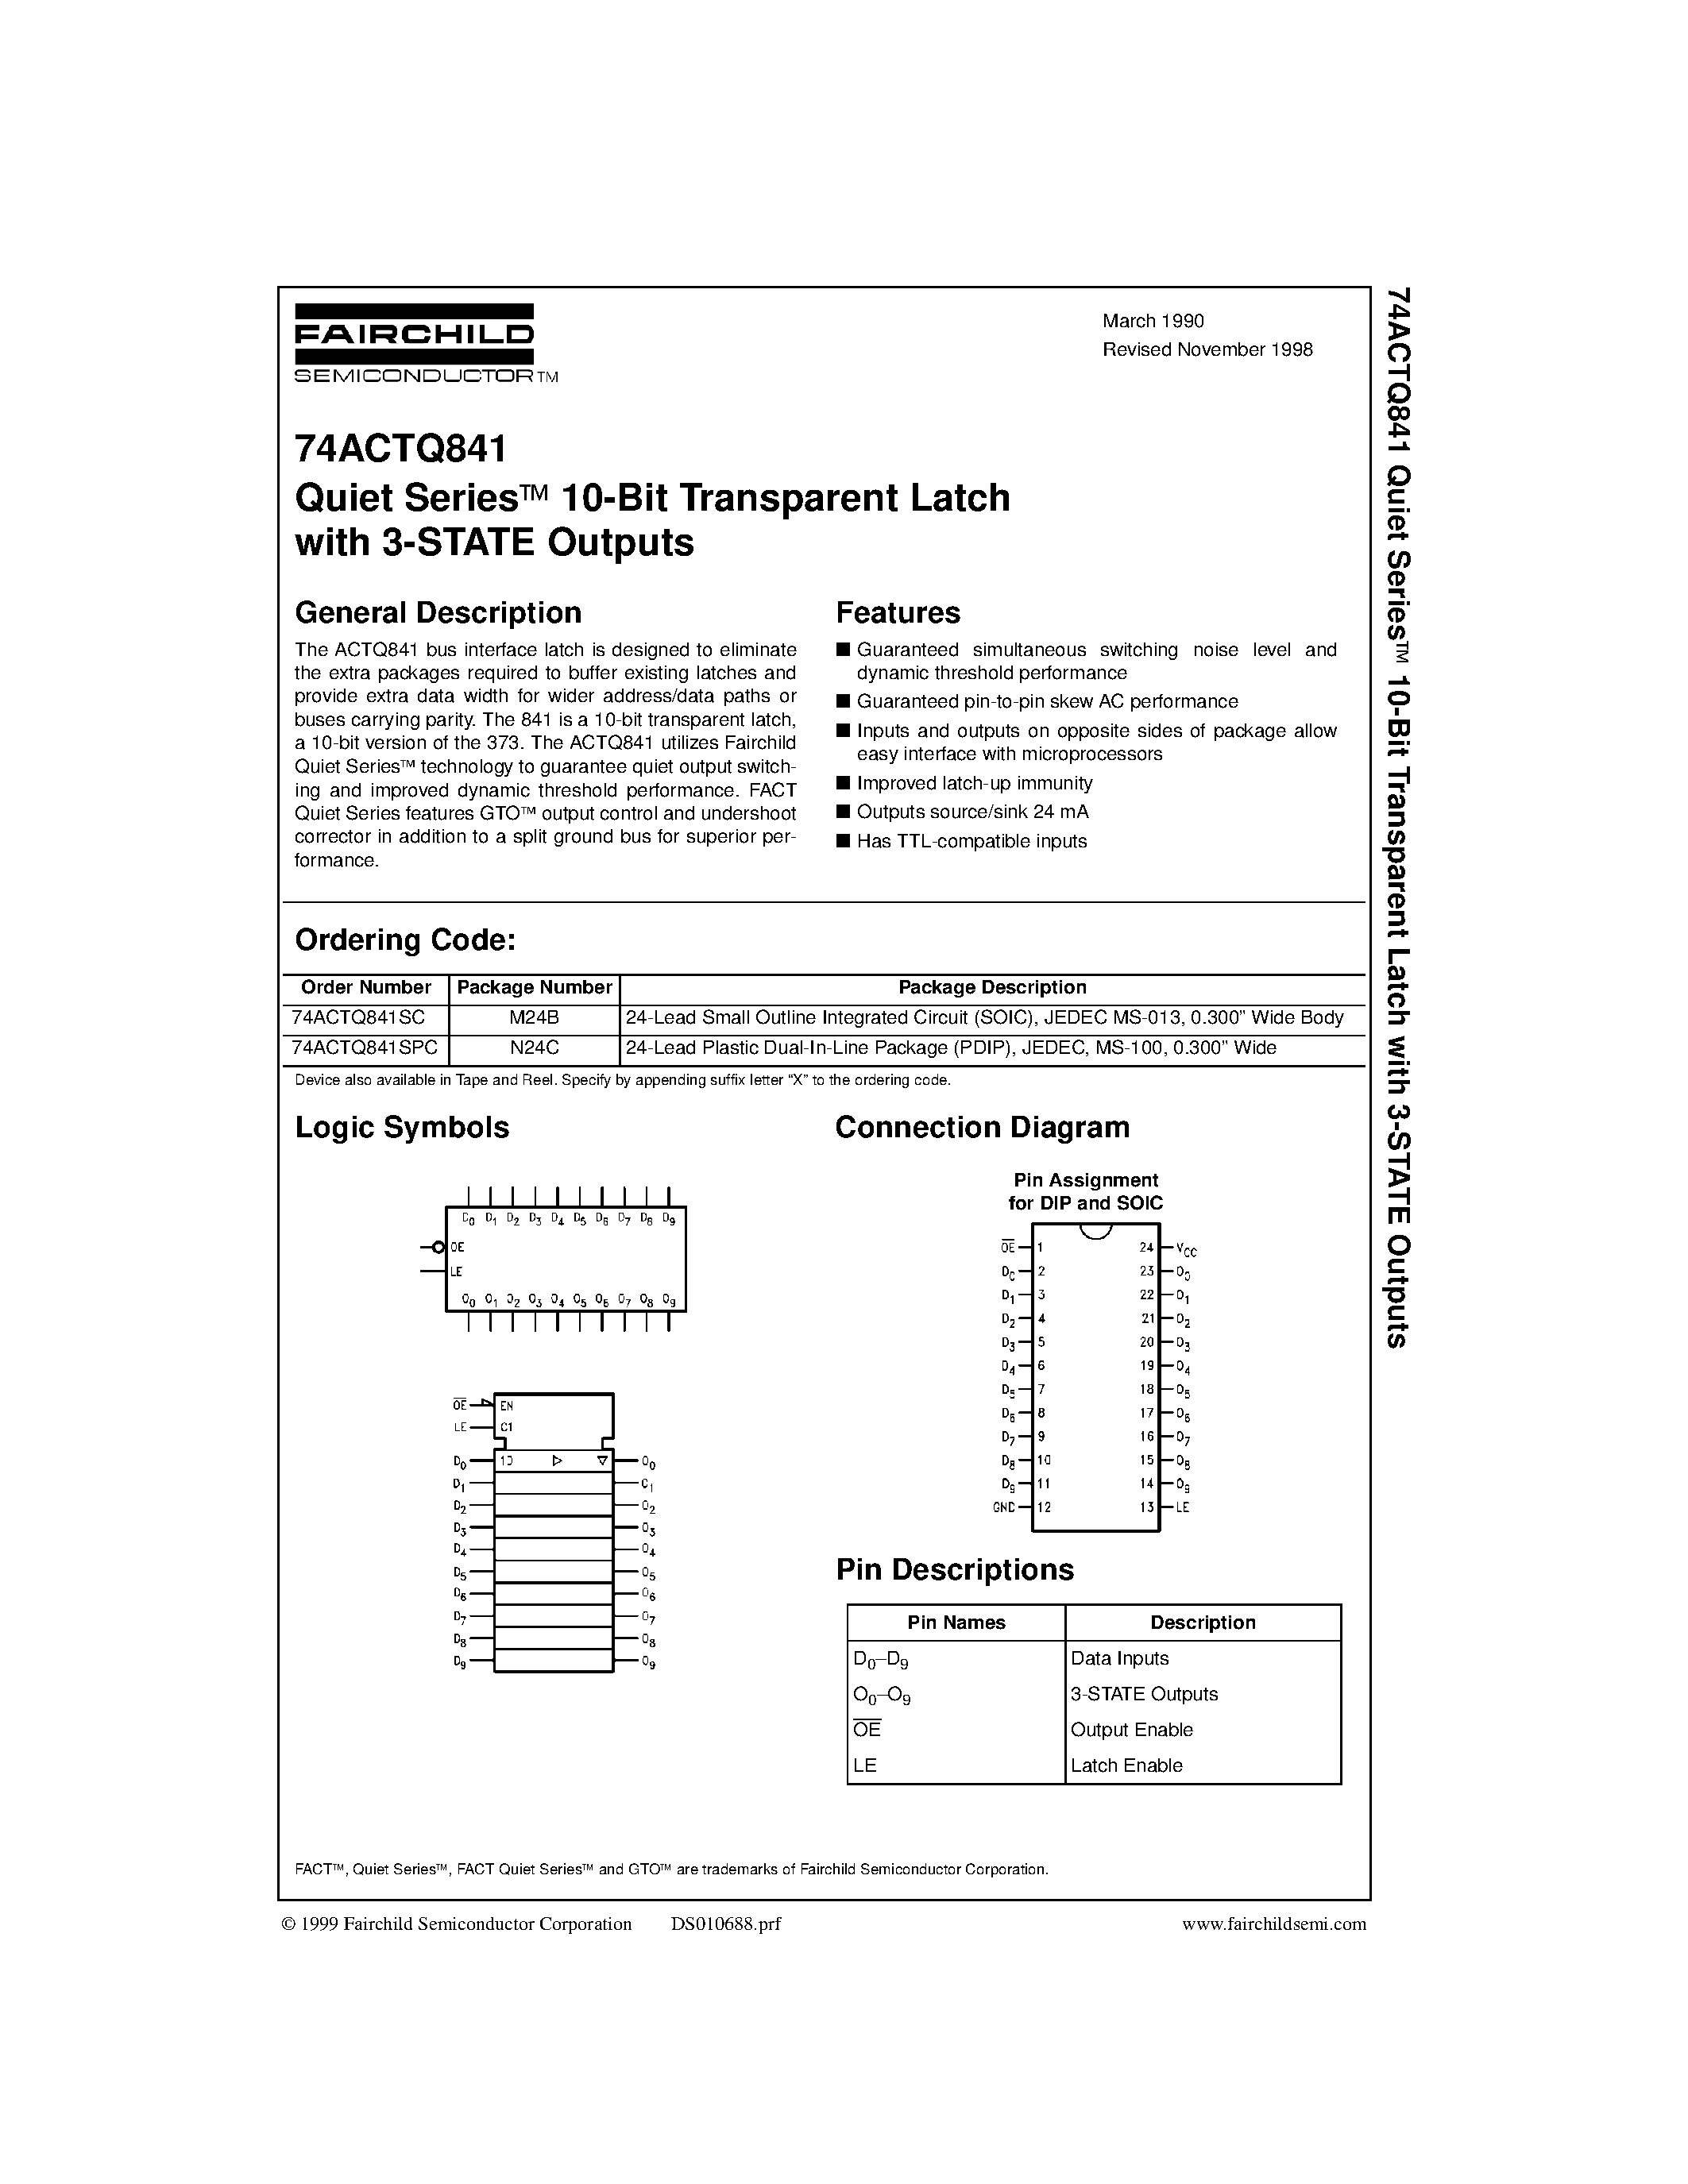 Даташит 74ACTQ841SC - Quiet Seriesa 10-Bit Transparent Latch with 3-STATE Outputs страница 1